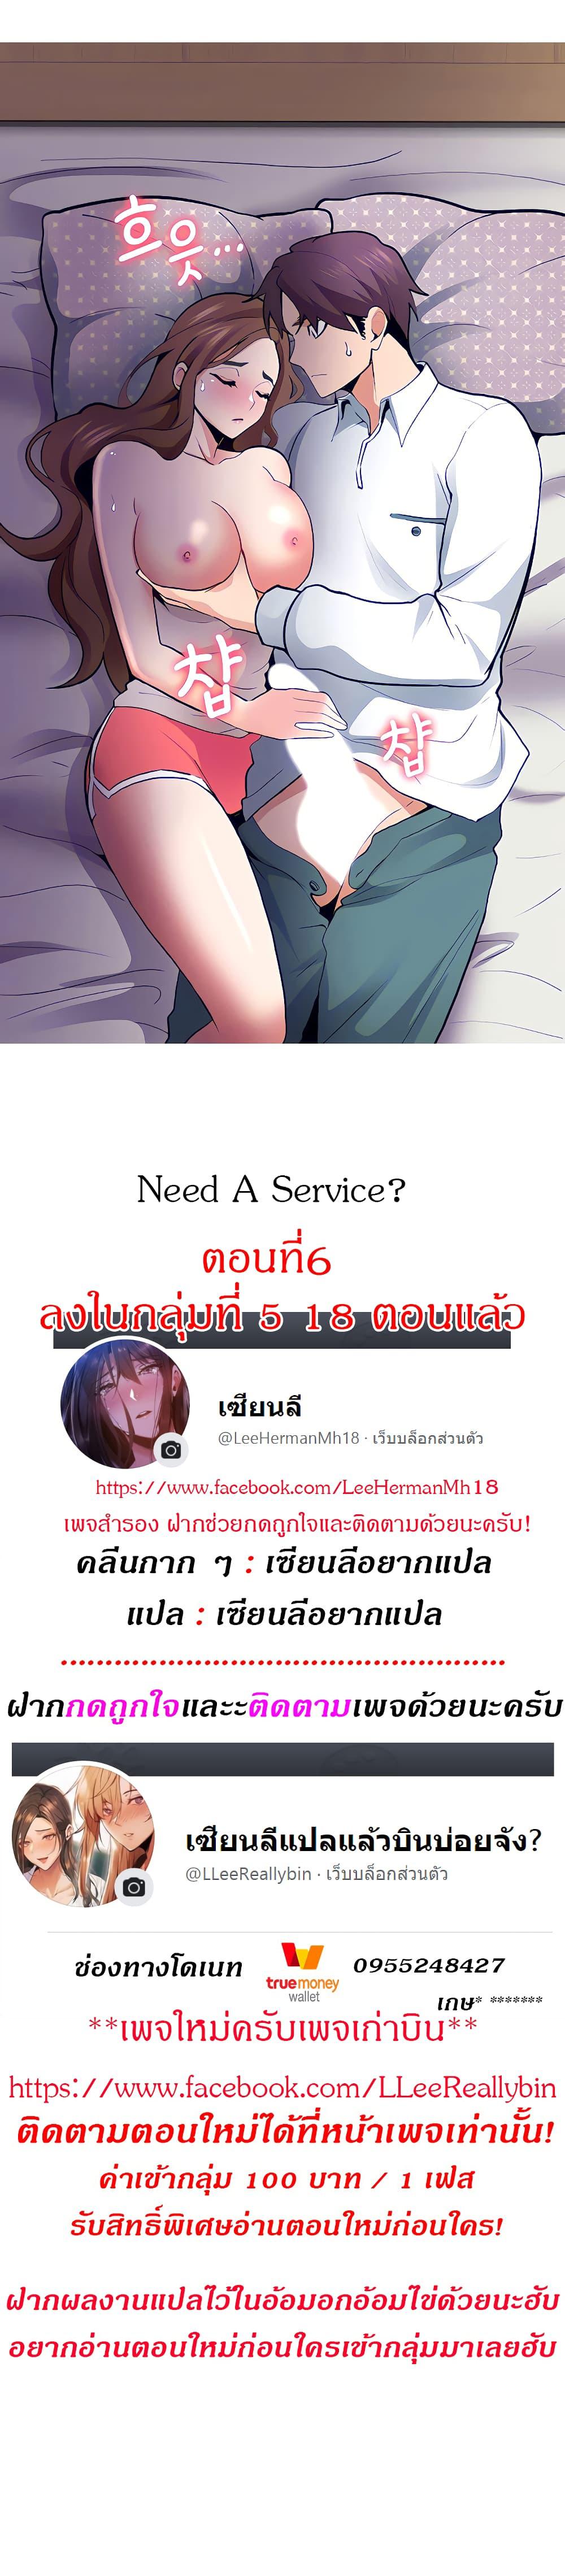 Need A Service? 6 ภาพ 0